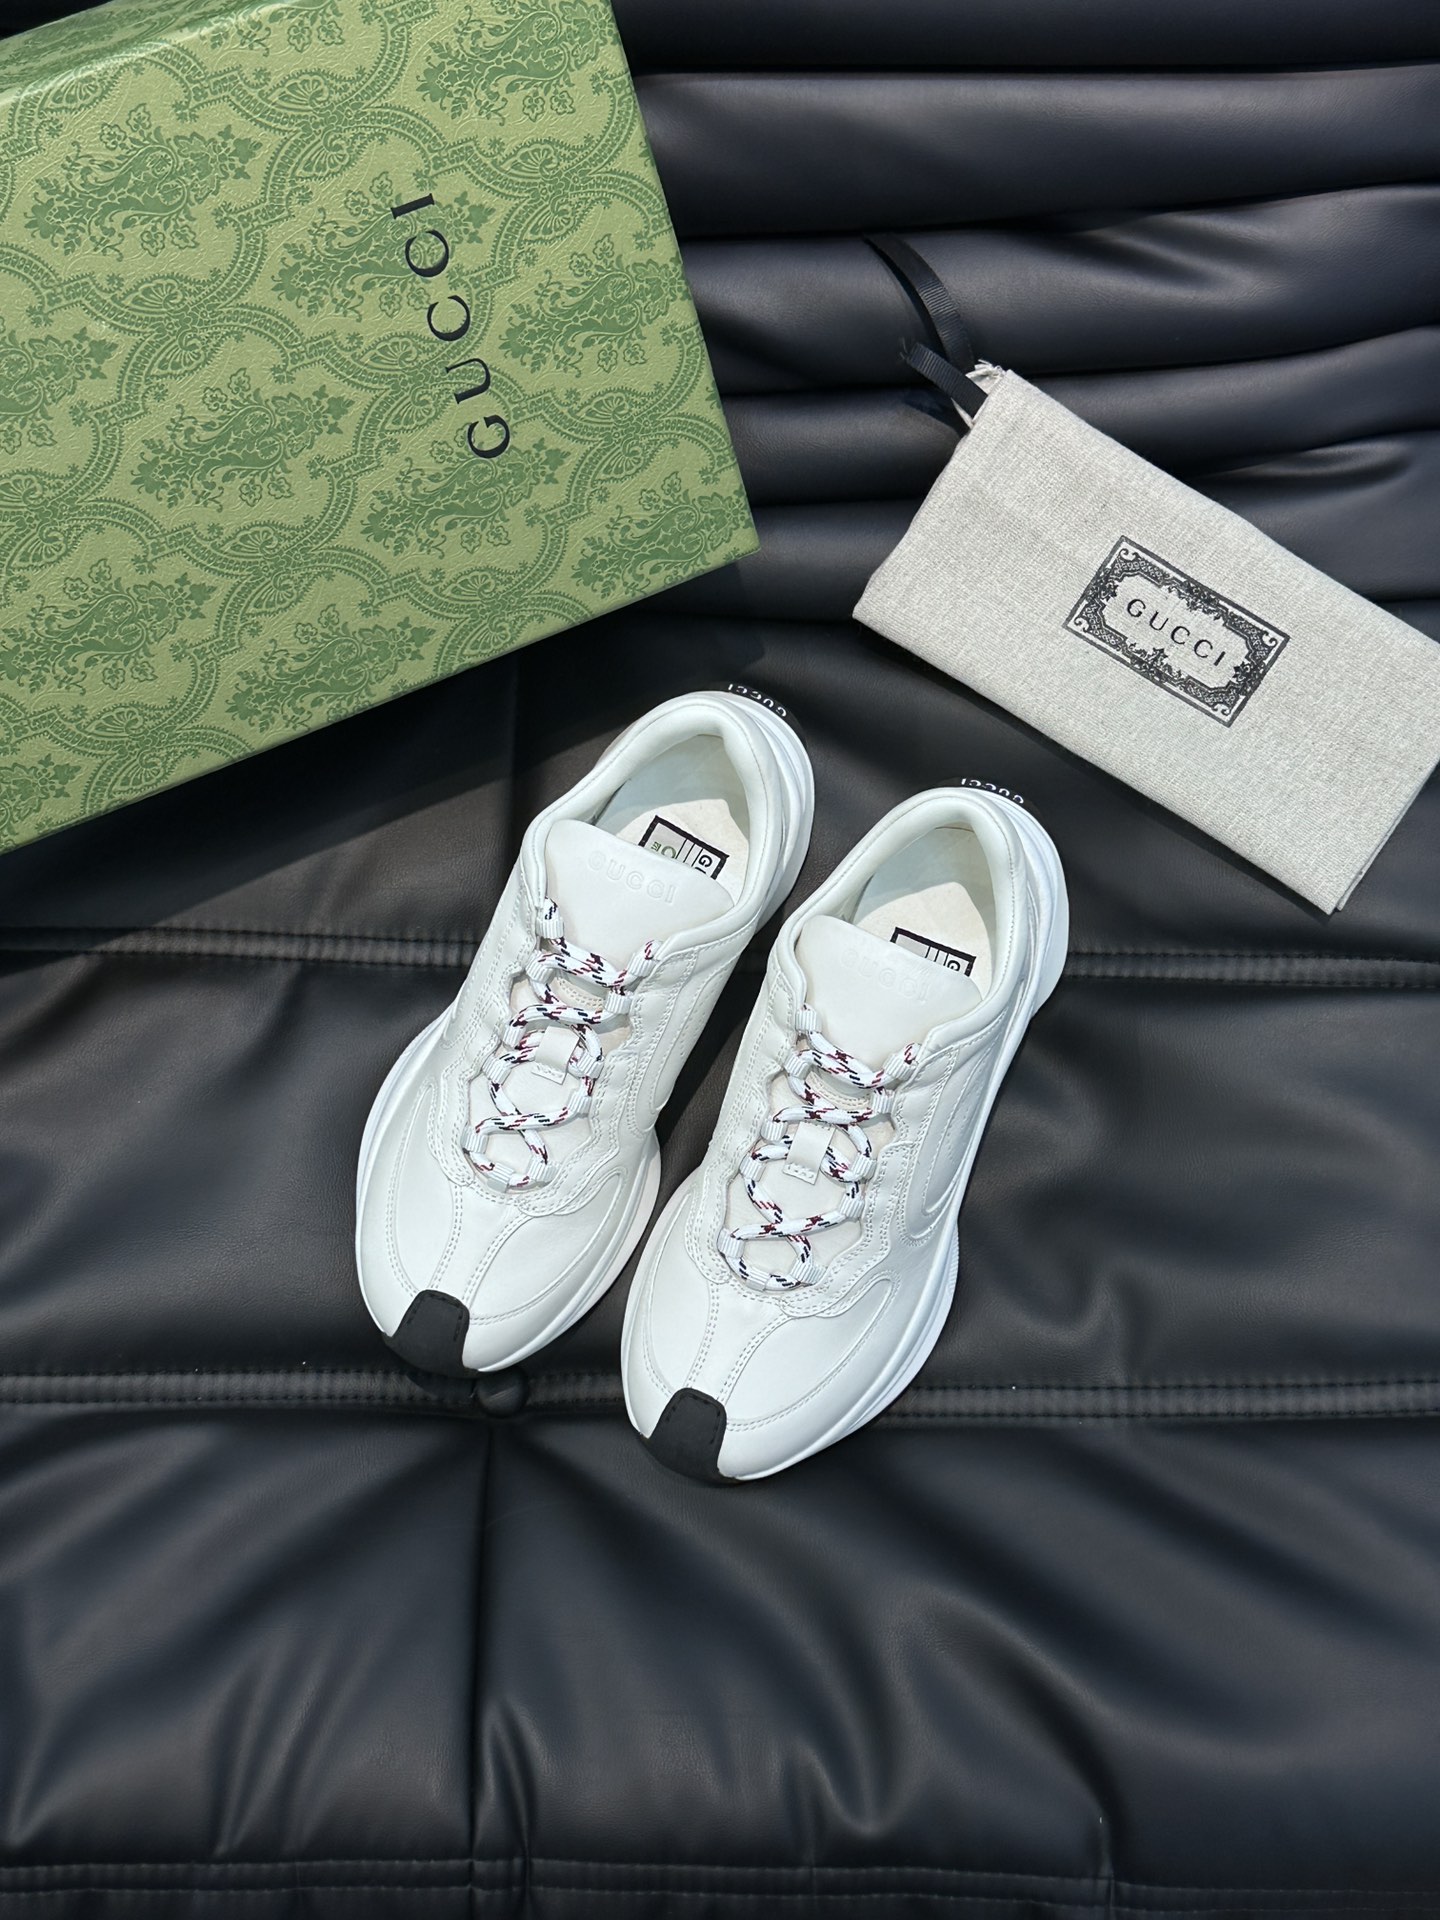 Gucci Shoes Sneakers Unisex Fashion Sweatpants